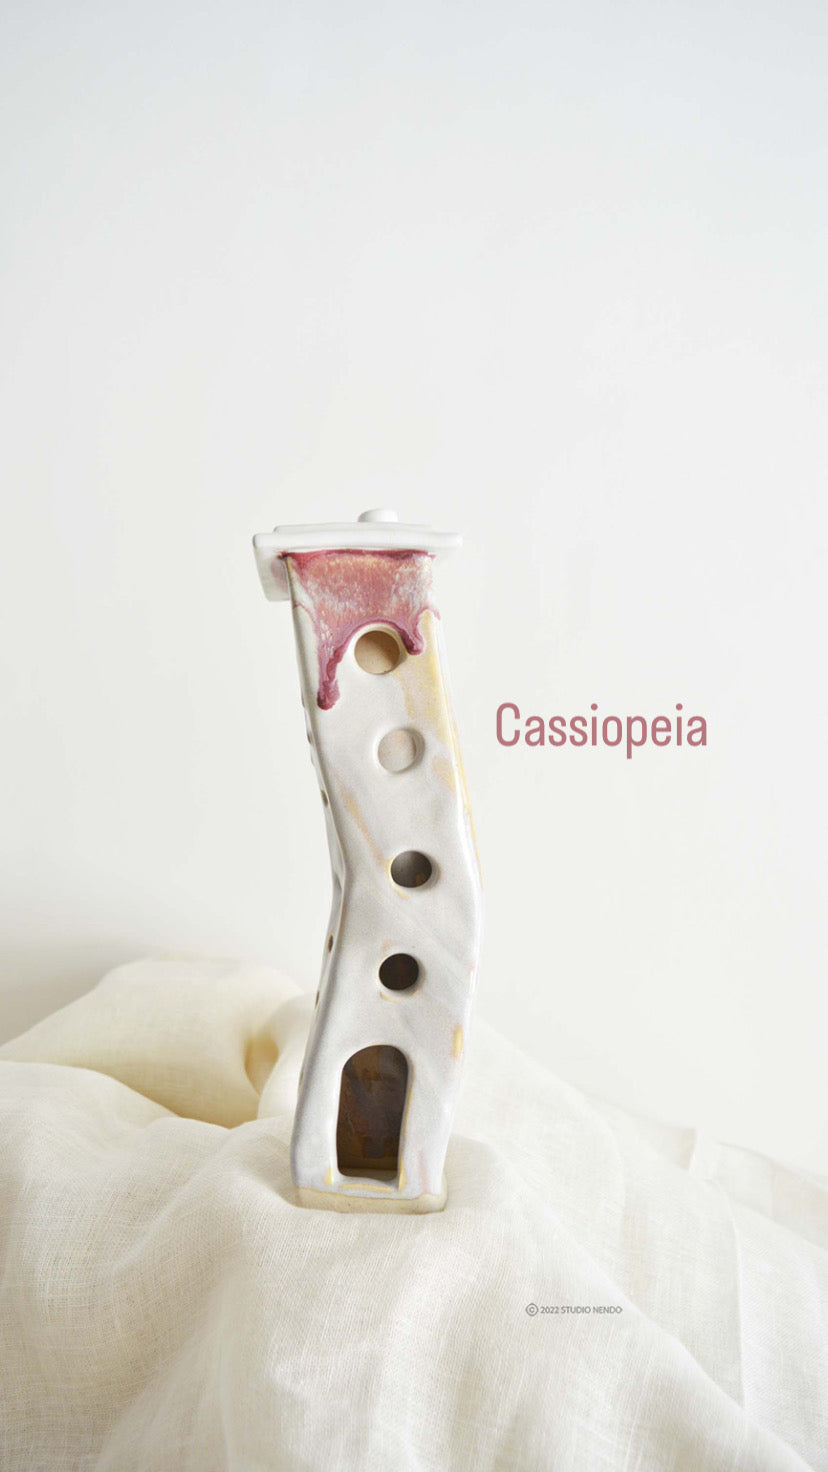 CASSIOPEIA- Topsy Turvy Tealight Housing Society- Ceramic Sculpture